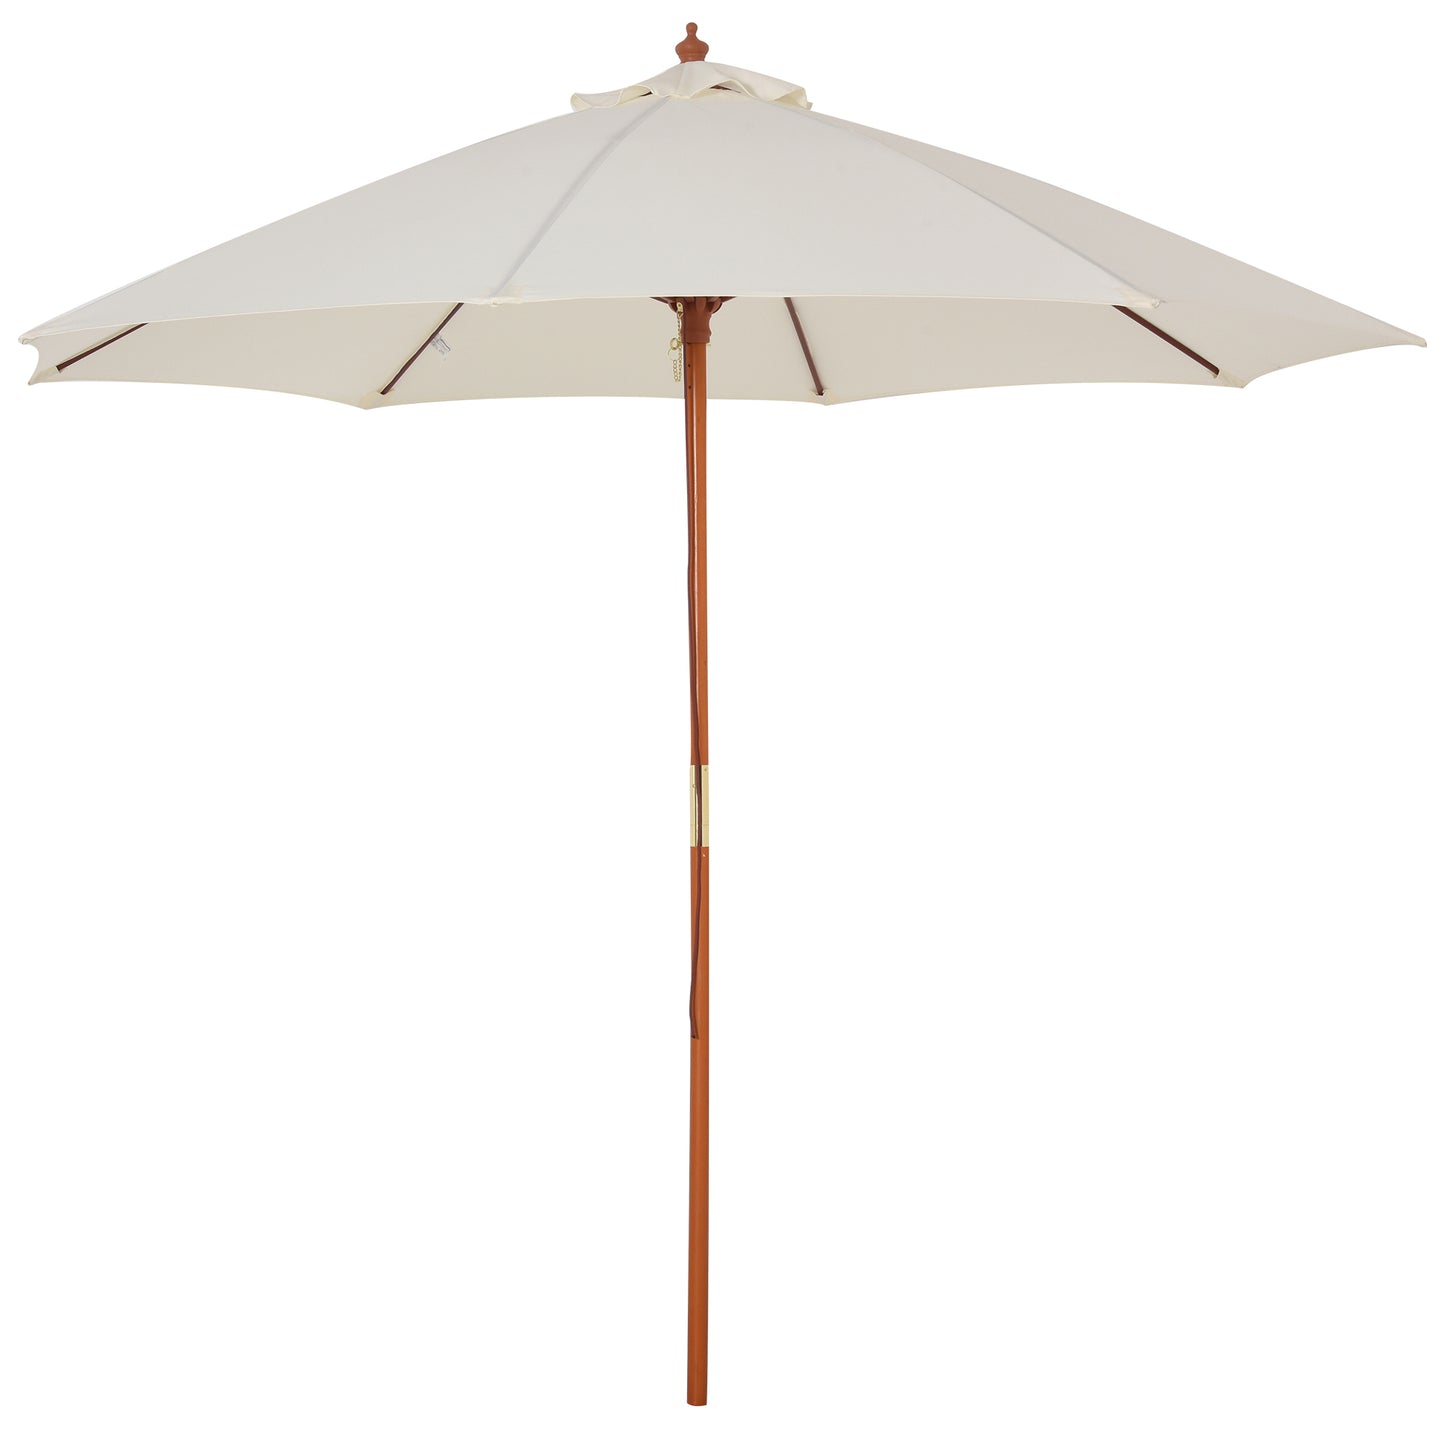 Outsunny 2.5m Wood Garden Parasol Sun Shade Patio Outdoor Market Umbrella Canopy with Top Vent, Cream White w/ Vent